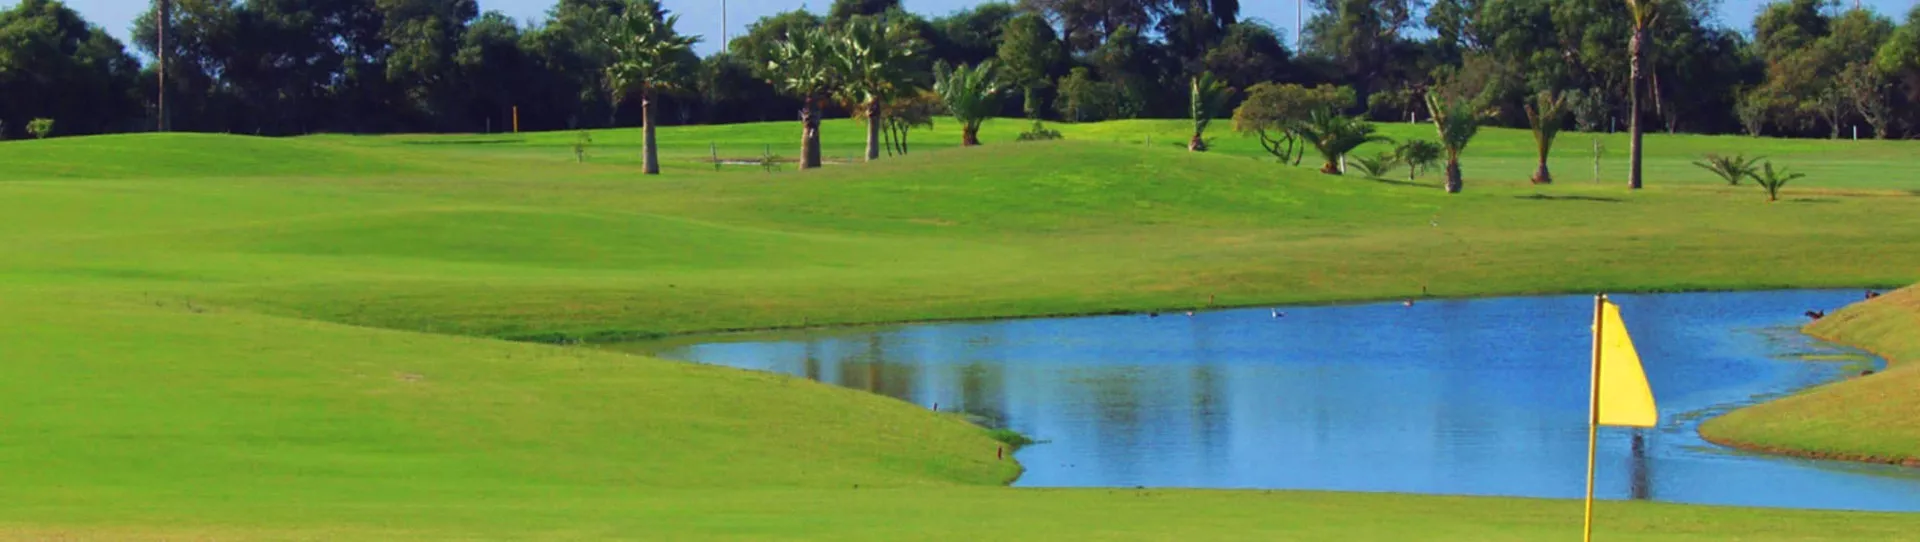 Spain golf courses - Club de Golf Playa Serena - Photo 2